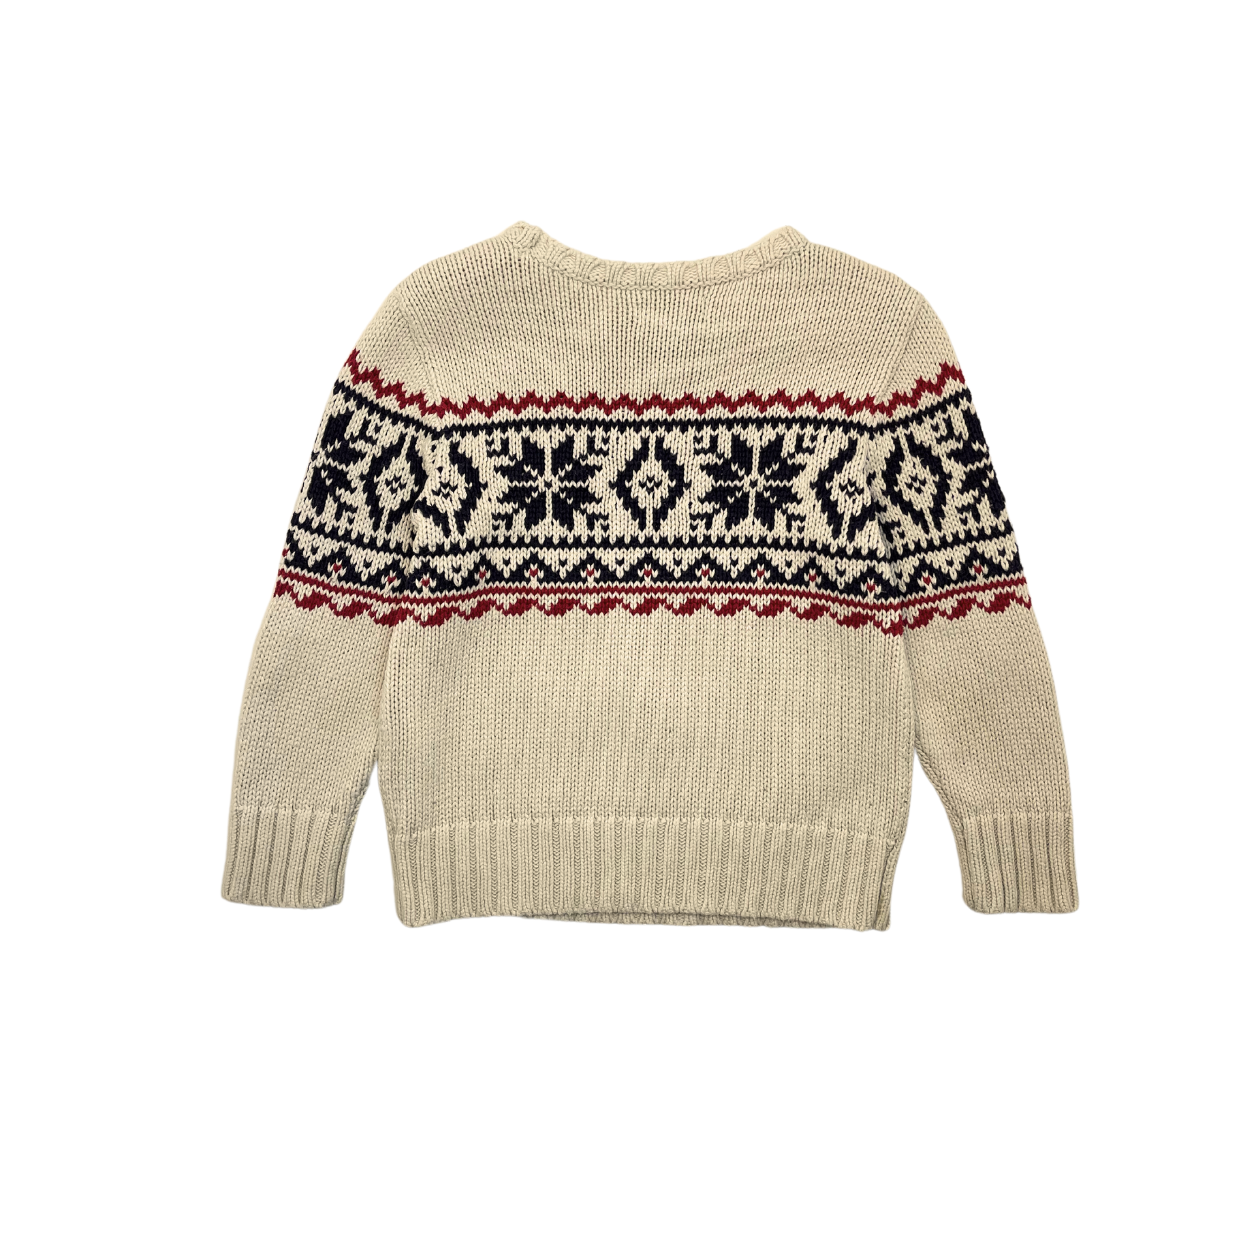 RALPH LAUREN - Patterned sweater - 5 years